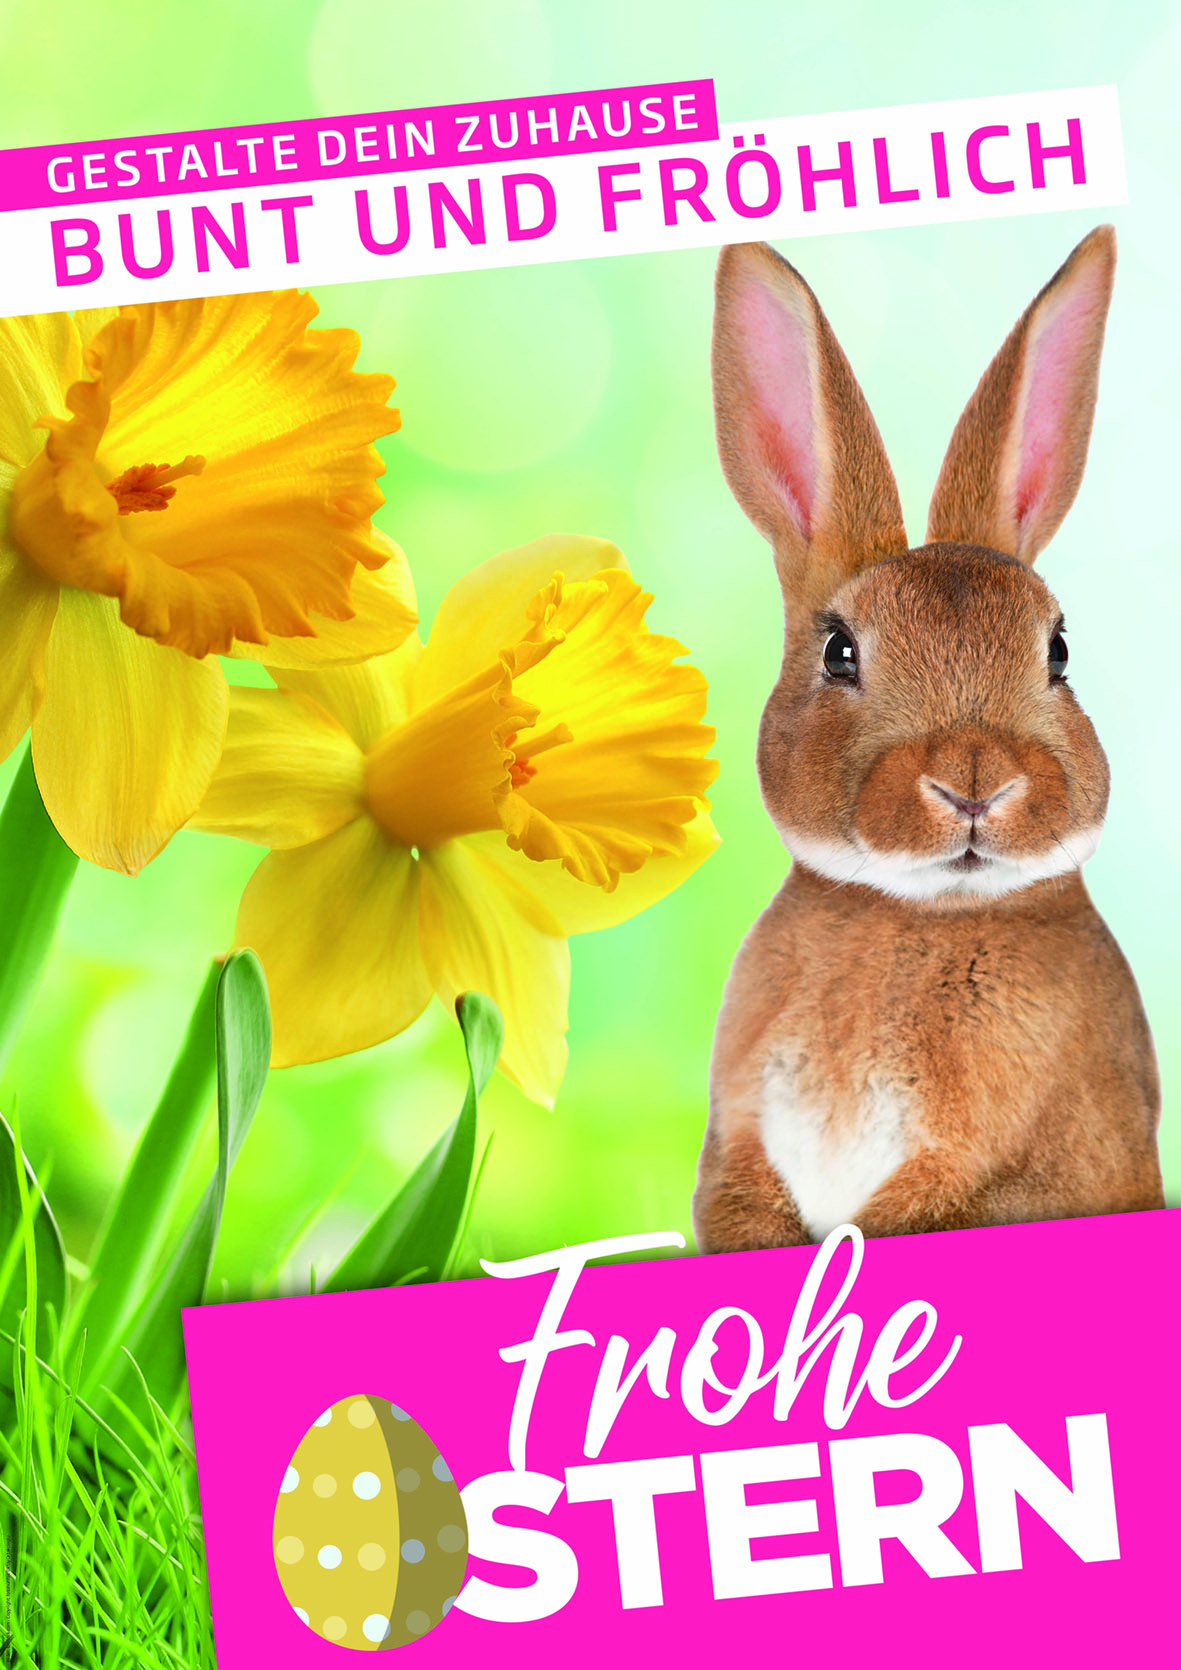 <b>Themenplakat März 2018</b><br />„Frohe Ostern“